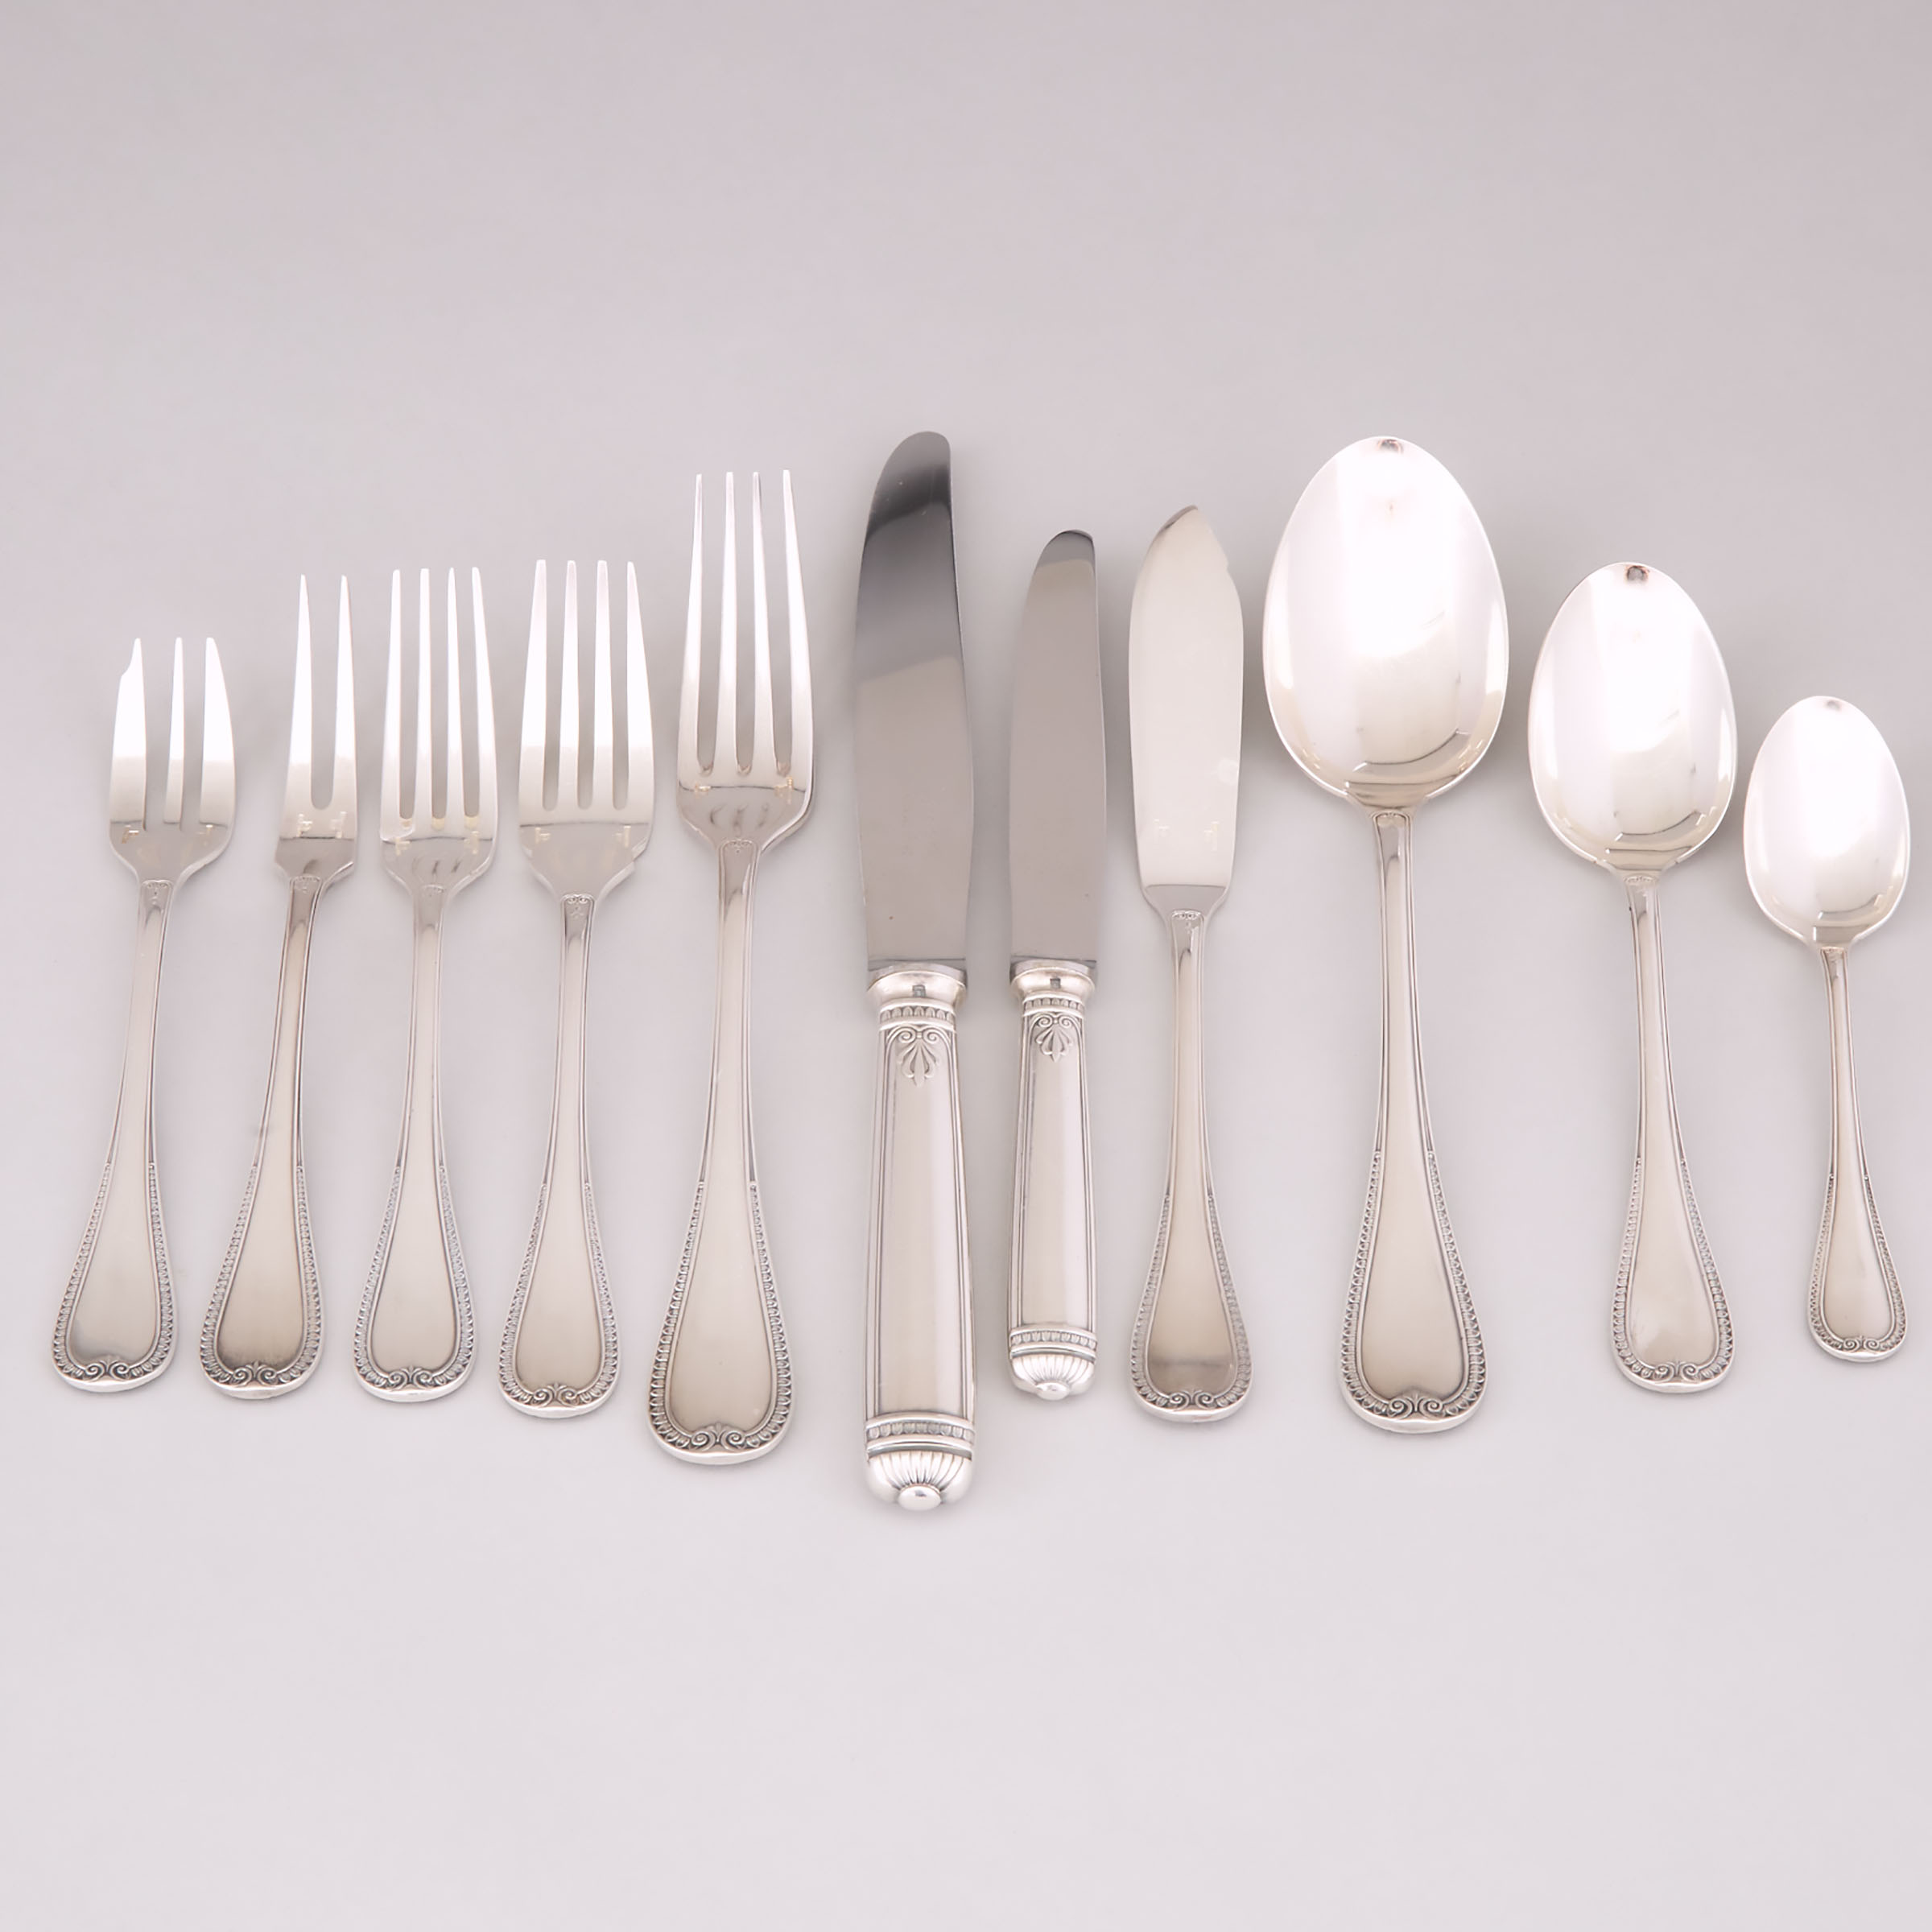 French Silver Plated ‘Malmaison’ Pattern Flatware Service, Christofle, 20th century